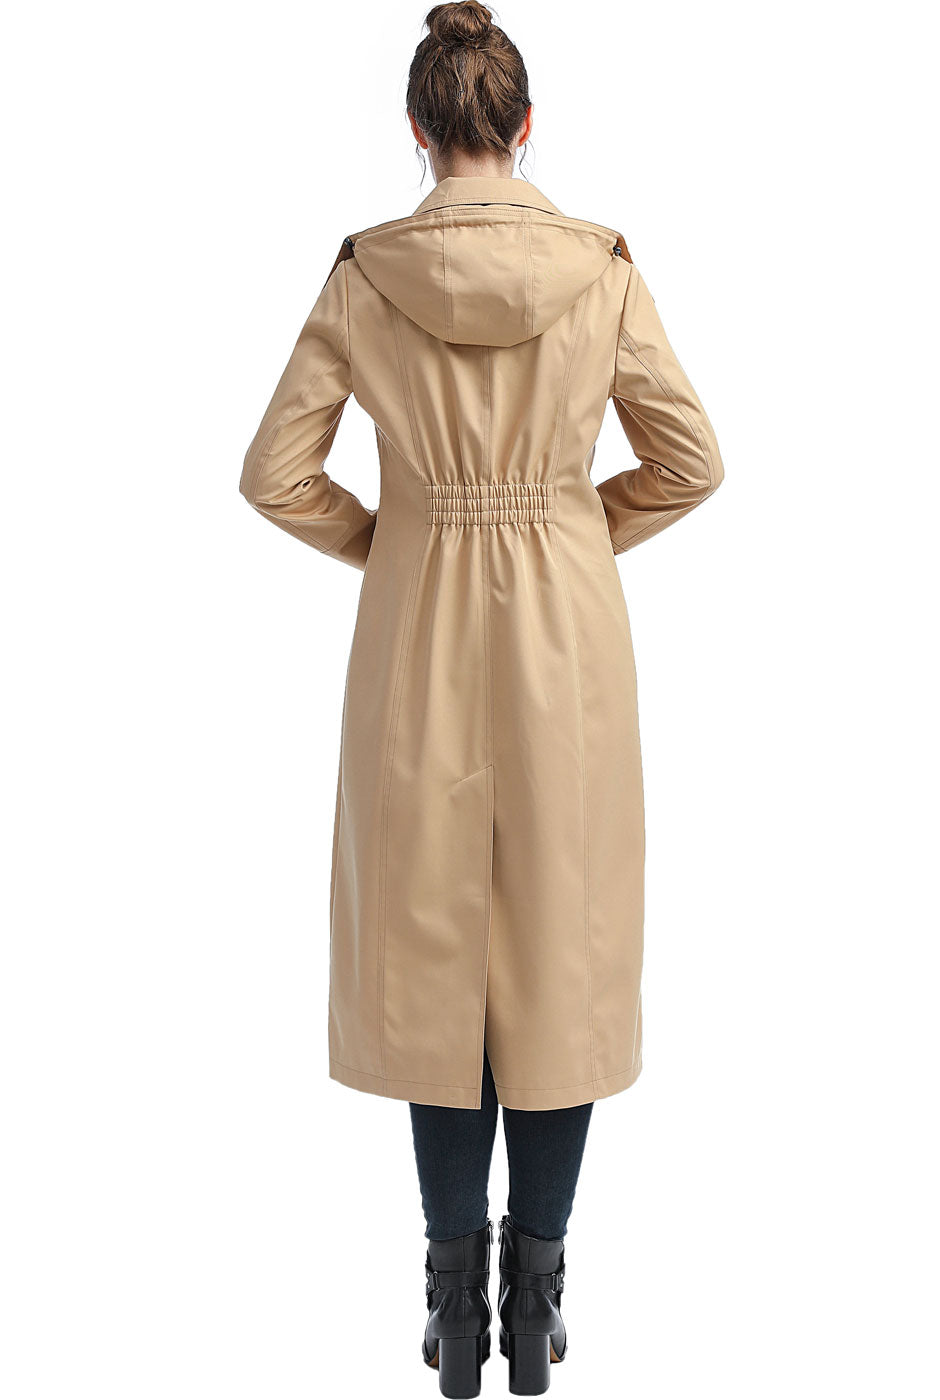 BGSD Women Kathy Waterproof Hooded Long Rain Coat